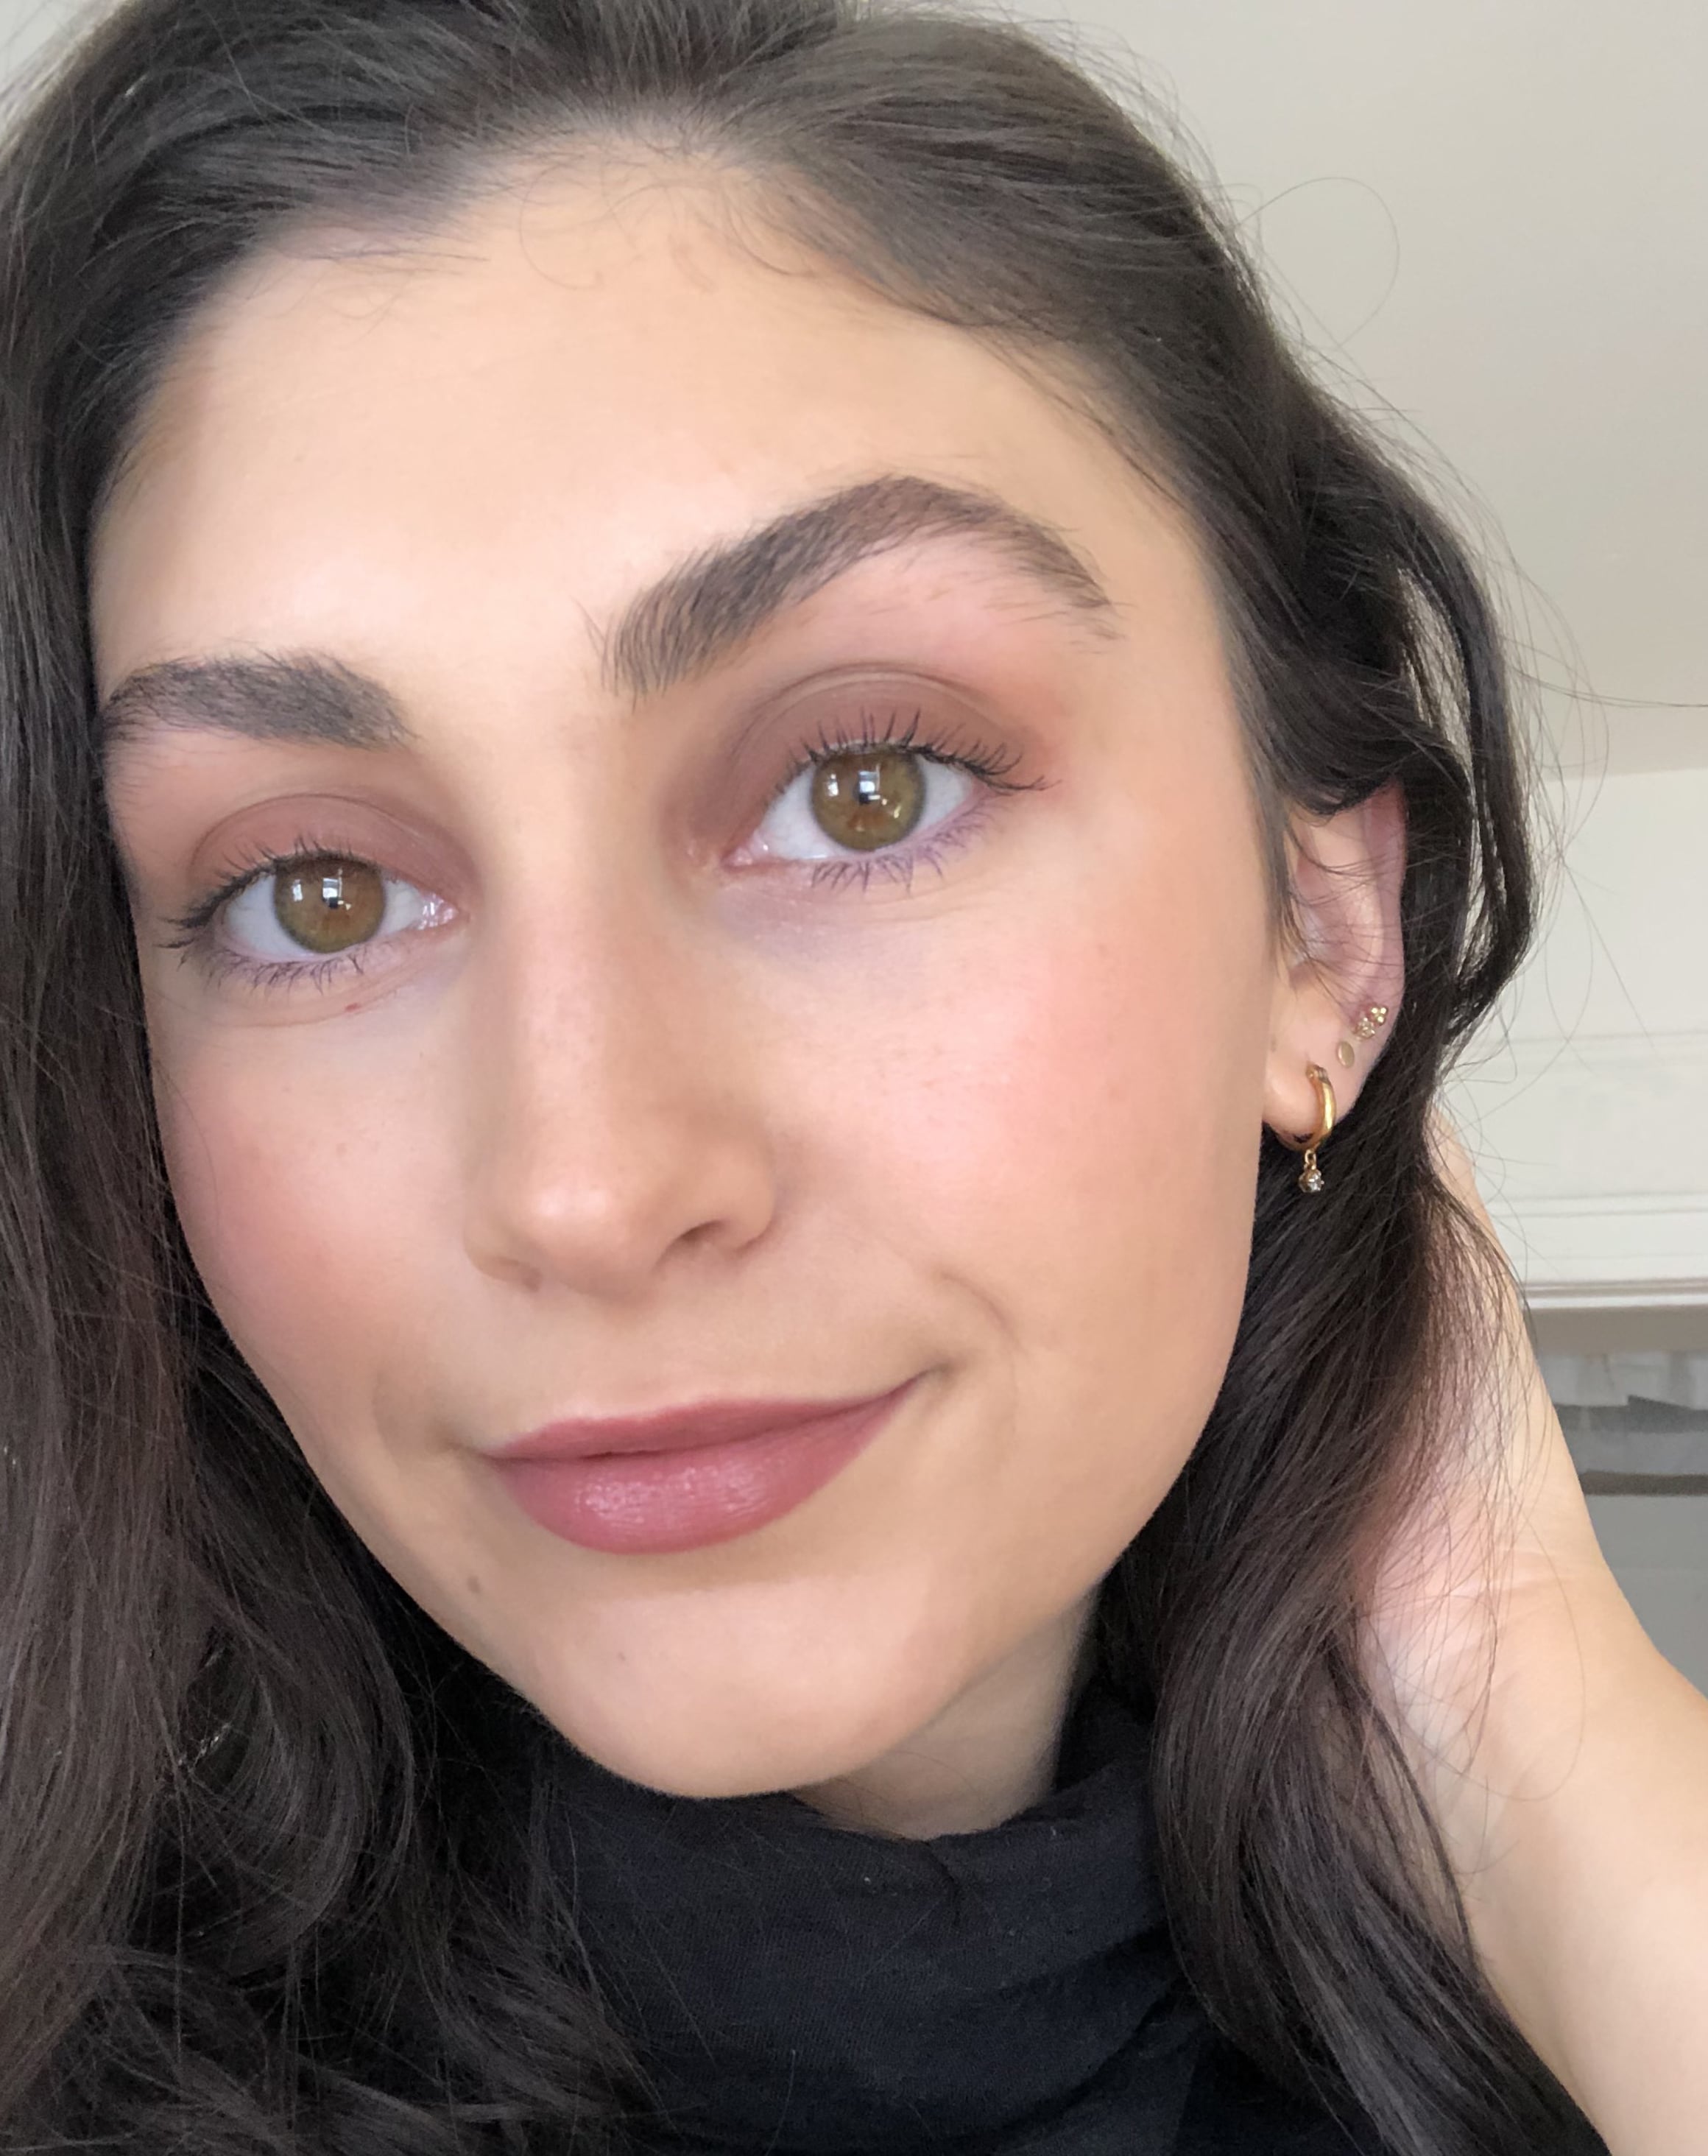 Halsey Launches About-Face Makeup Line